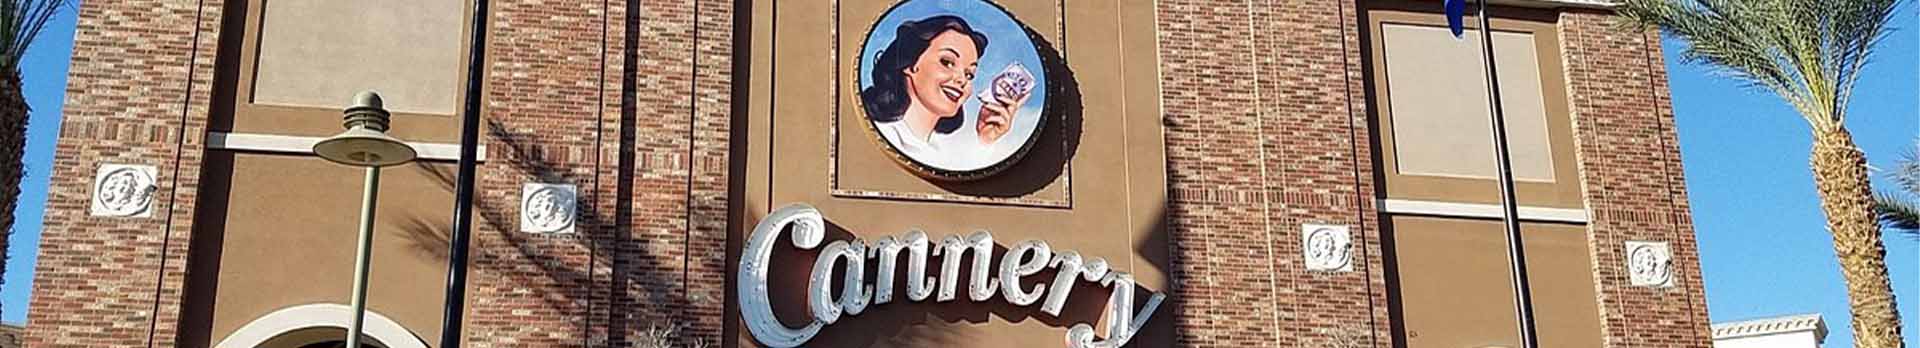 Cannery Casino & Hotel